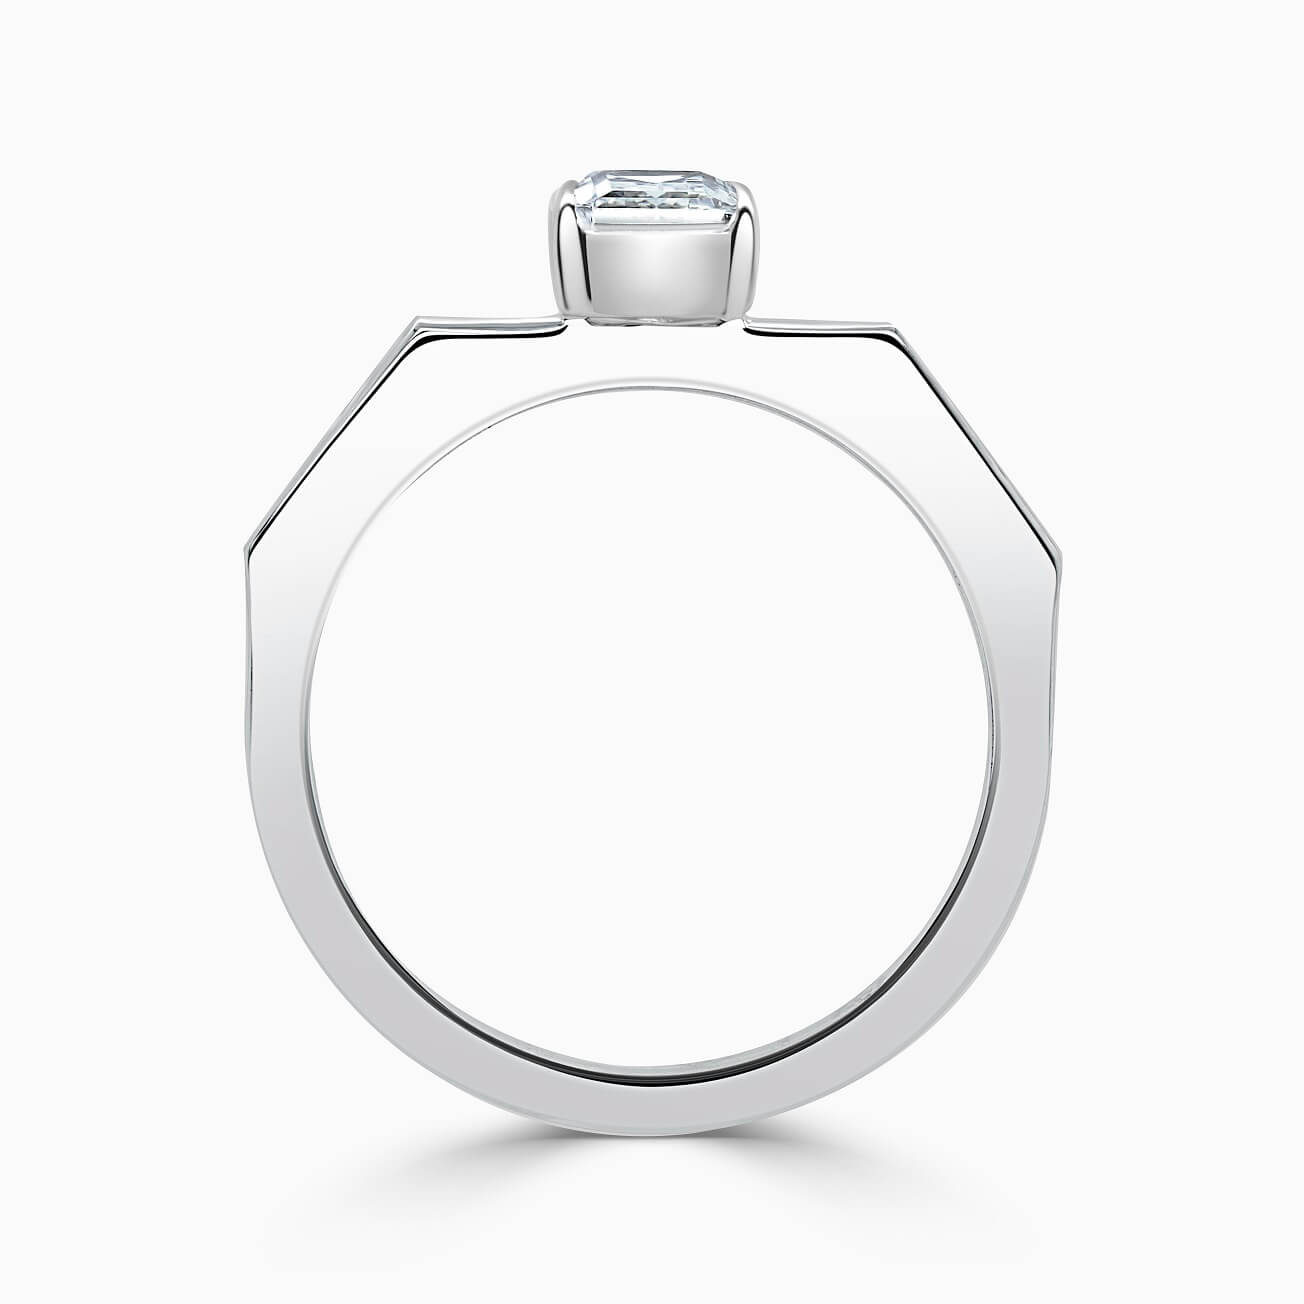 18ct White Gold Emerald Cut Geometric Engagement Ring